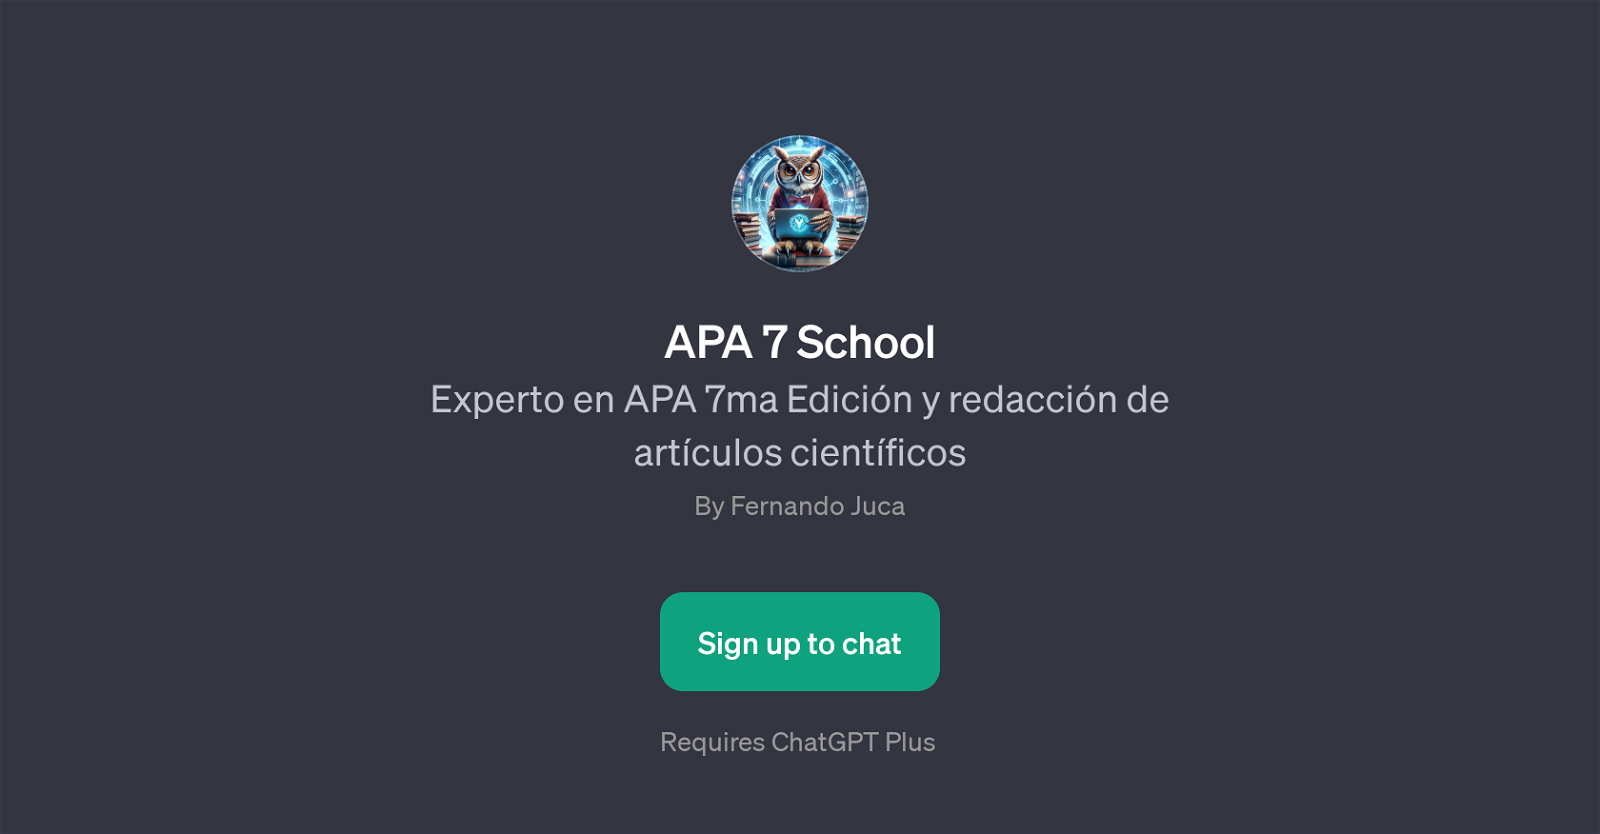 APA 7 School website